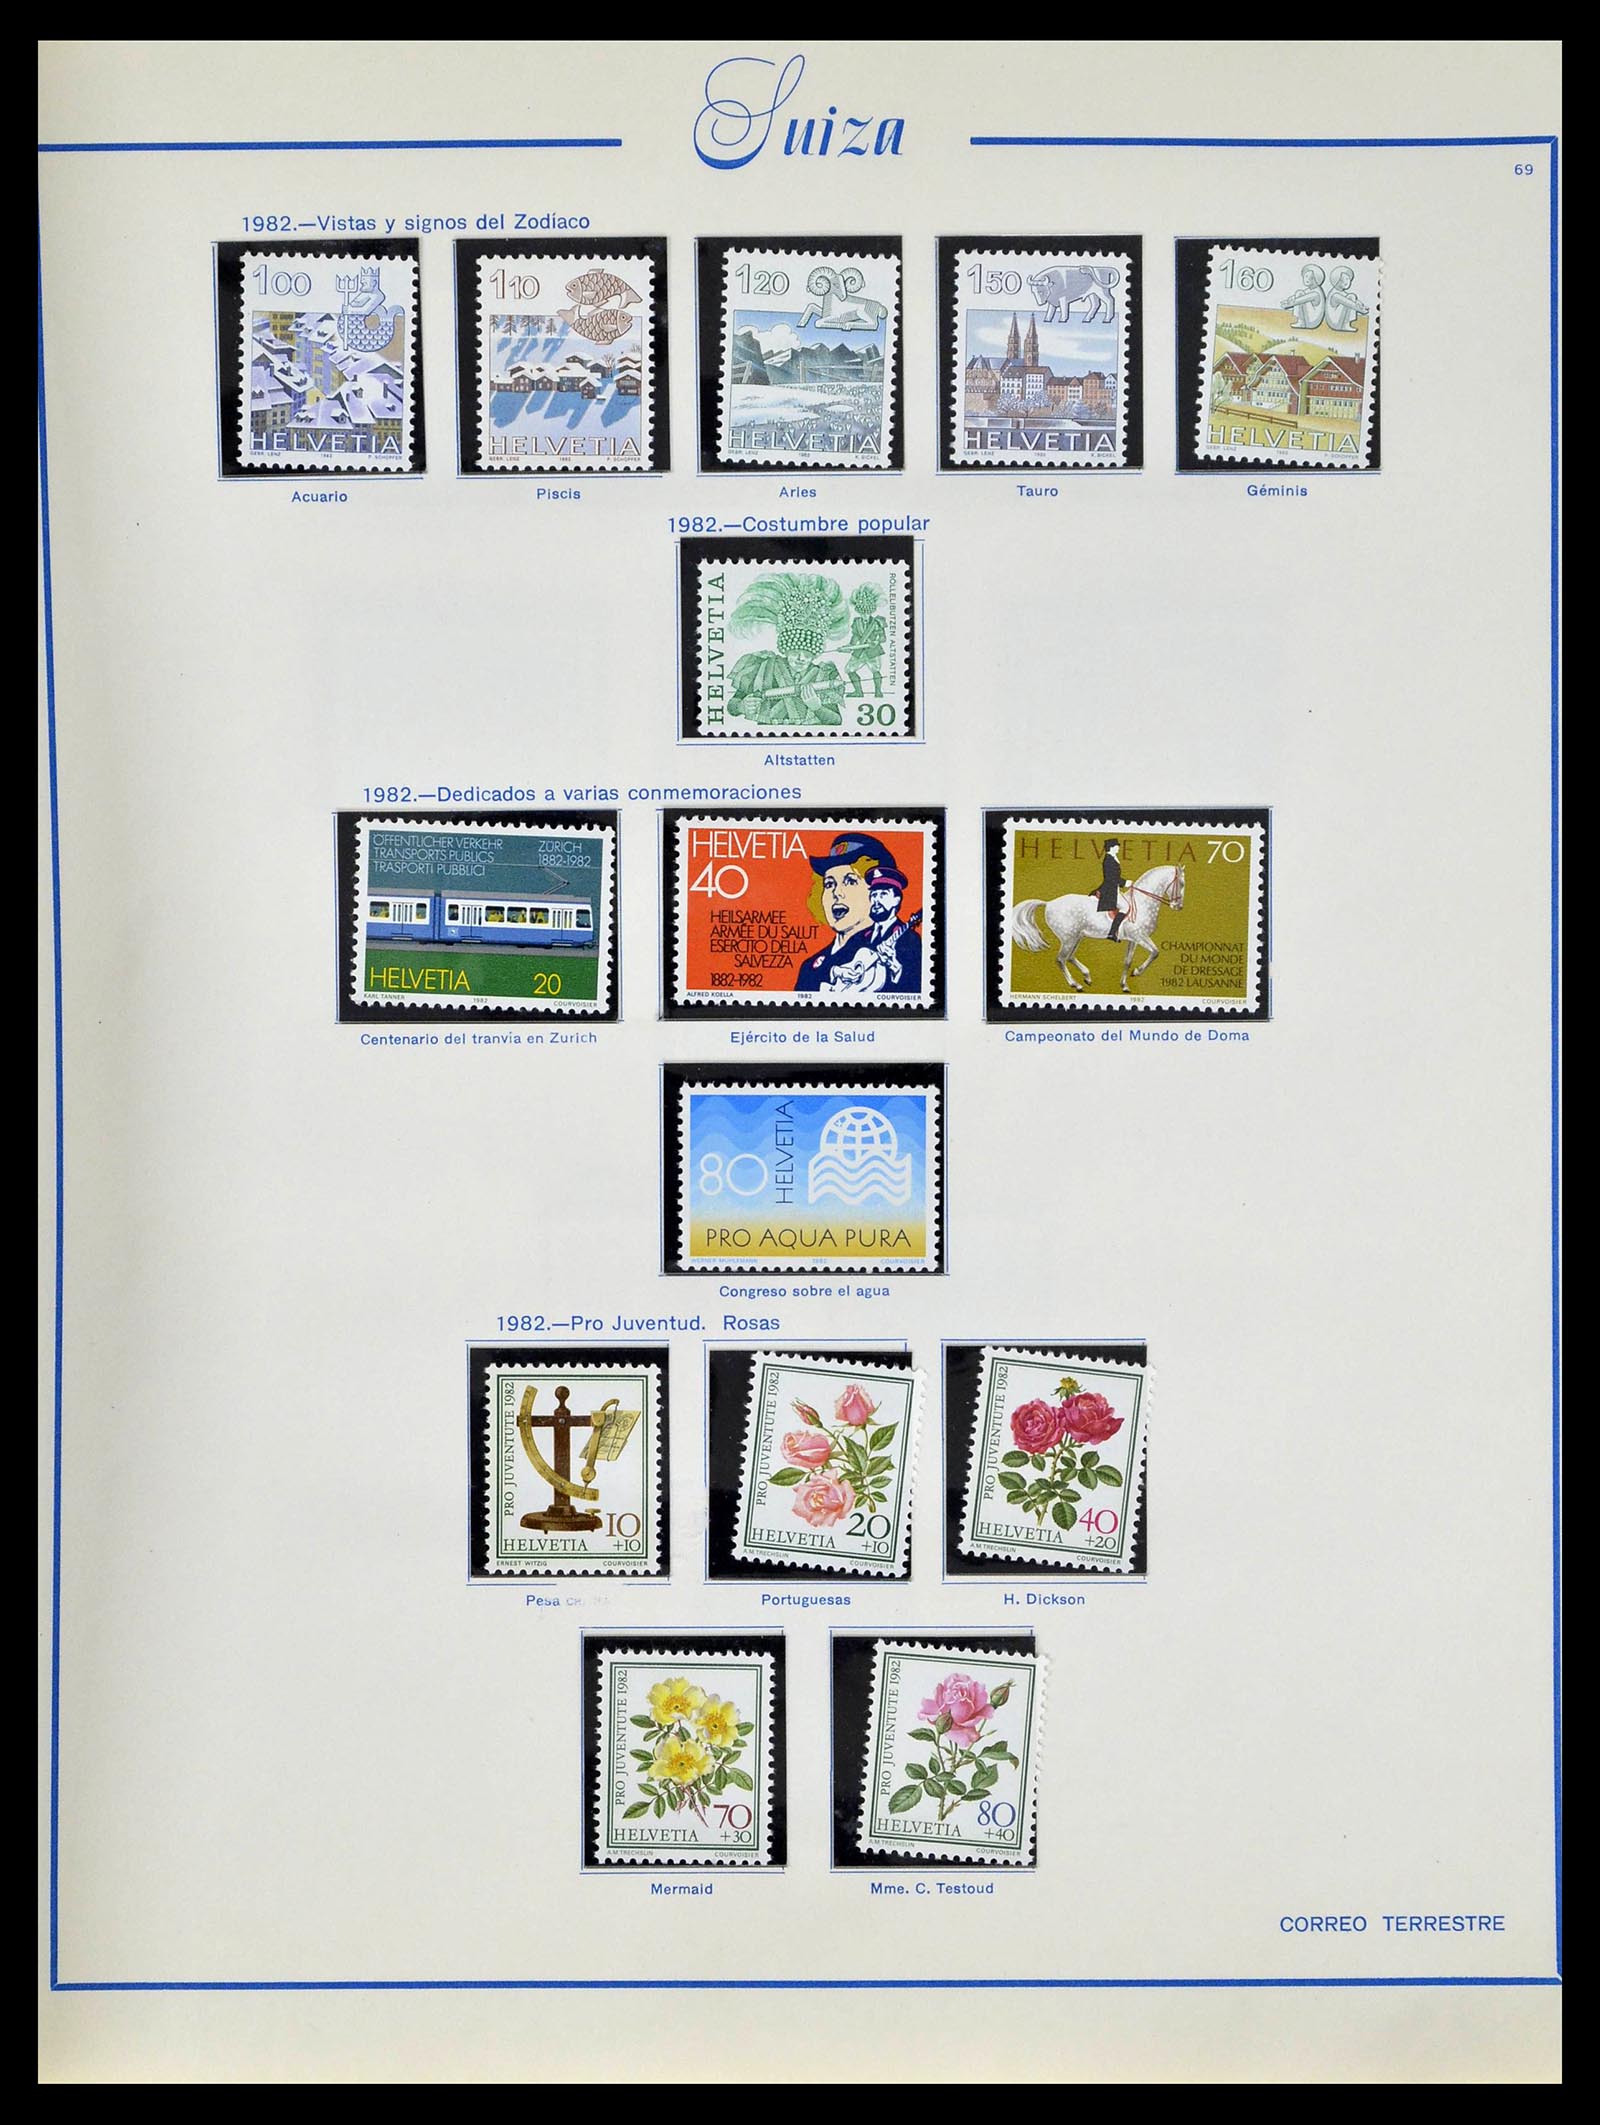 39217 0076 - Stamp collection 39217 Switzerland 1850-1986.